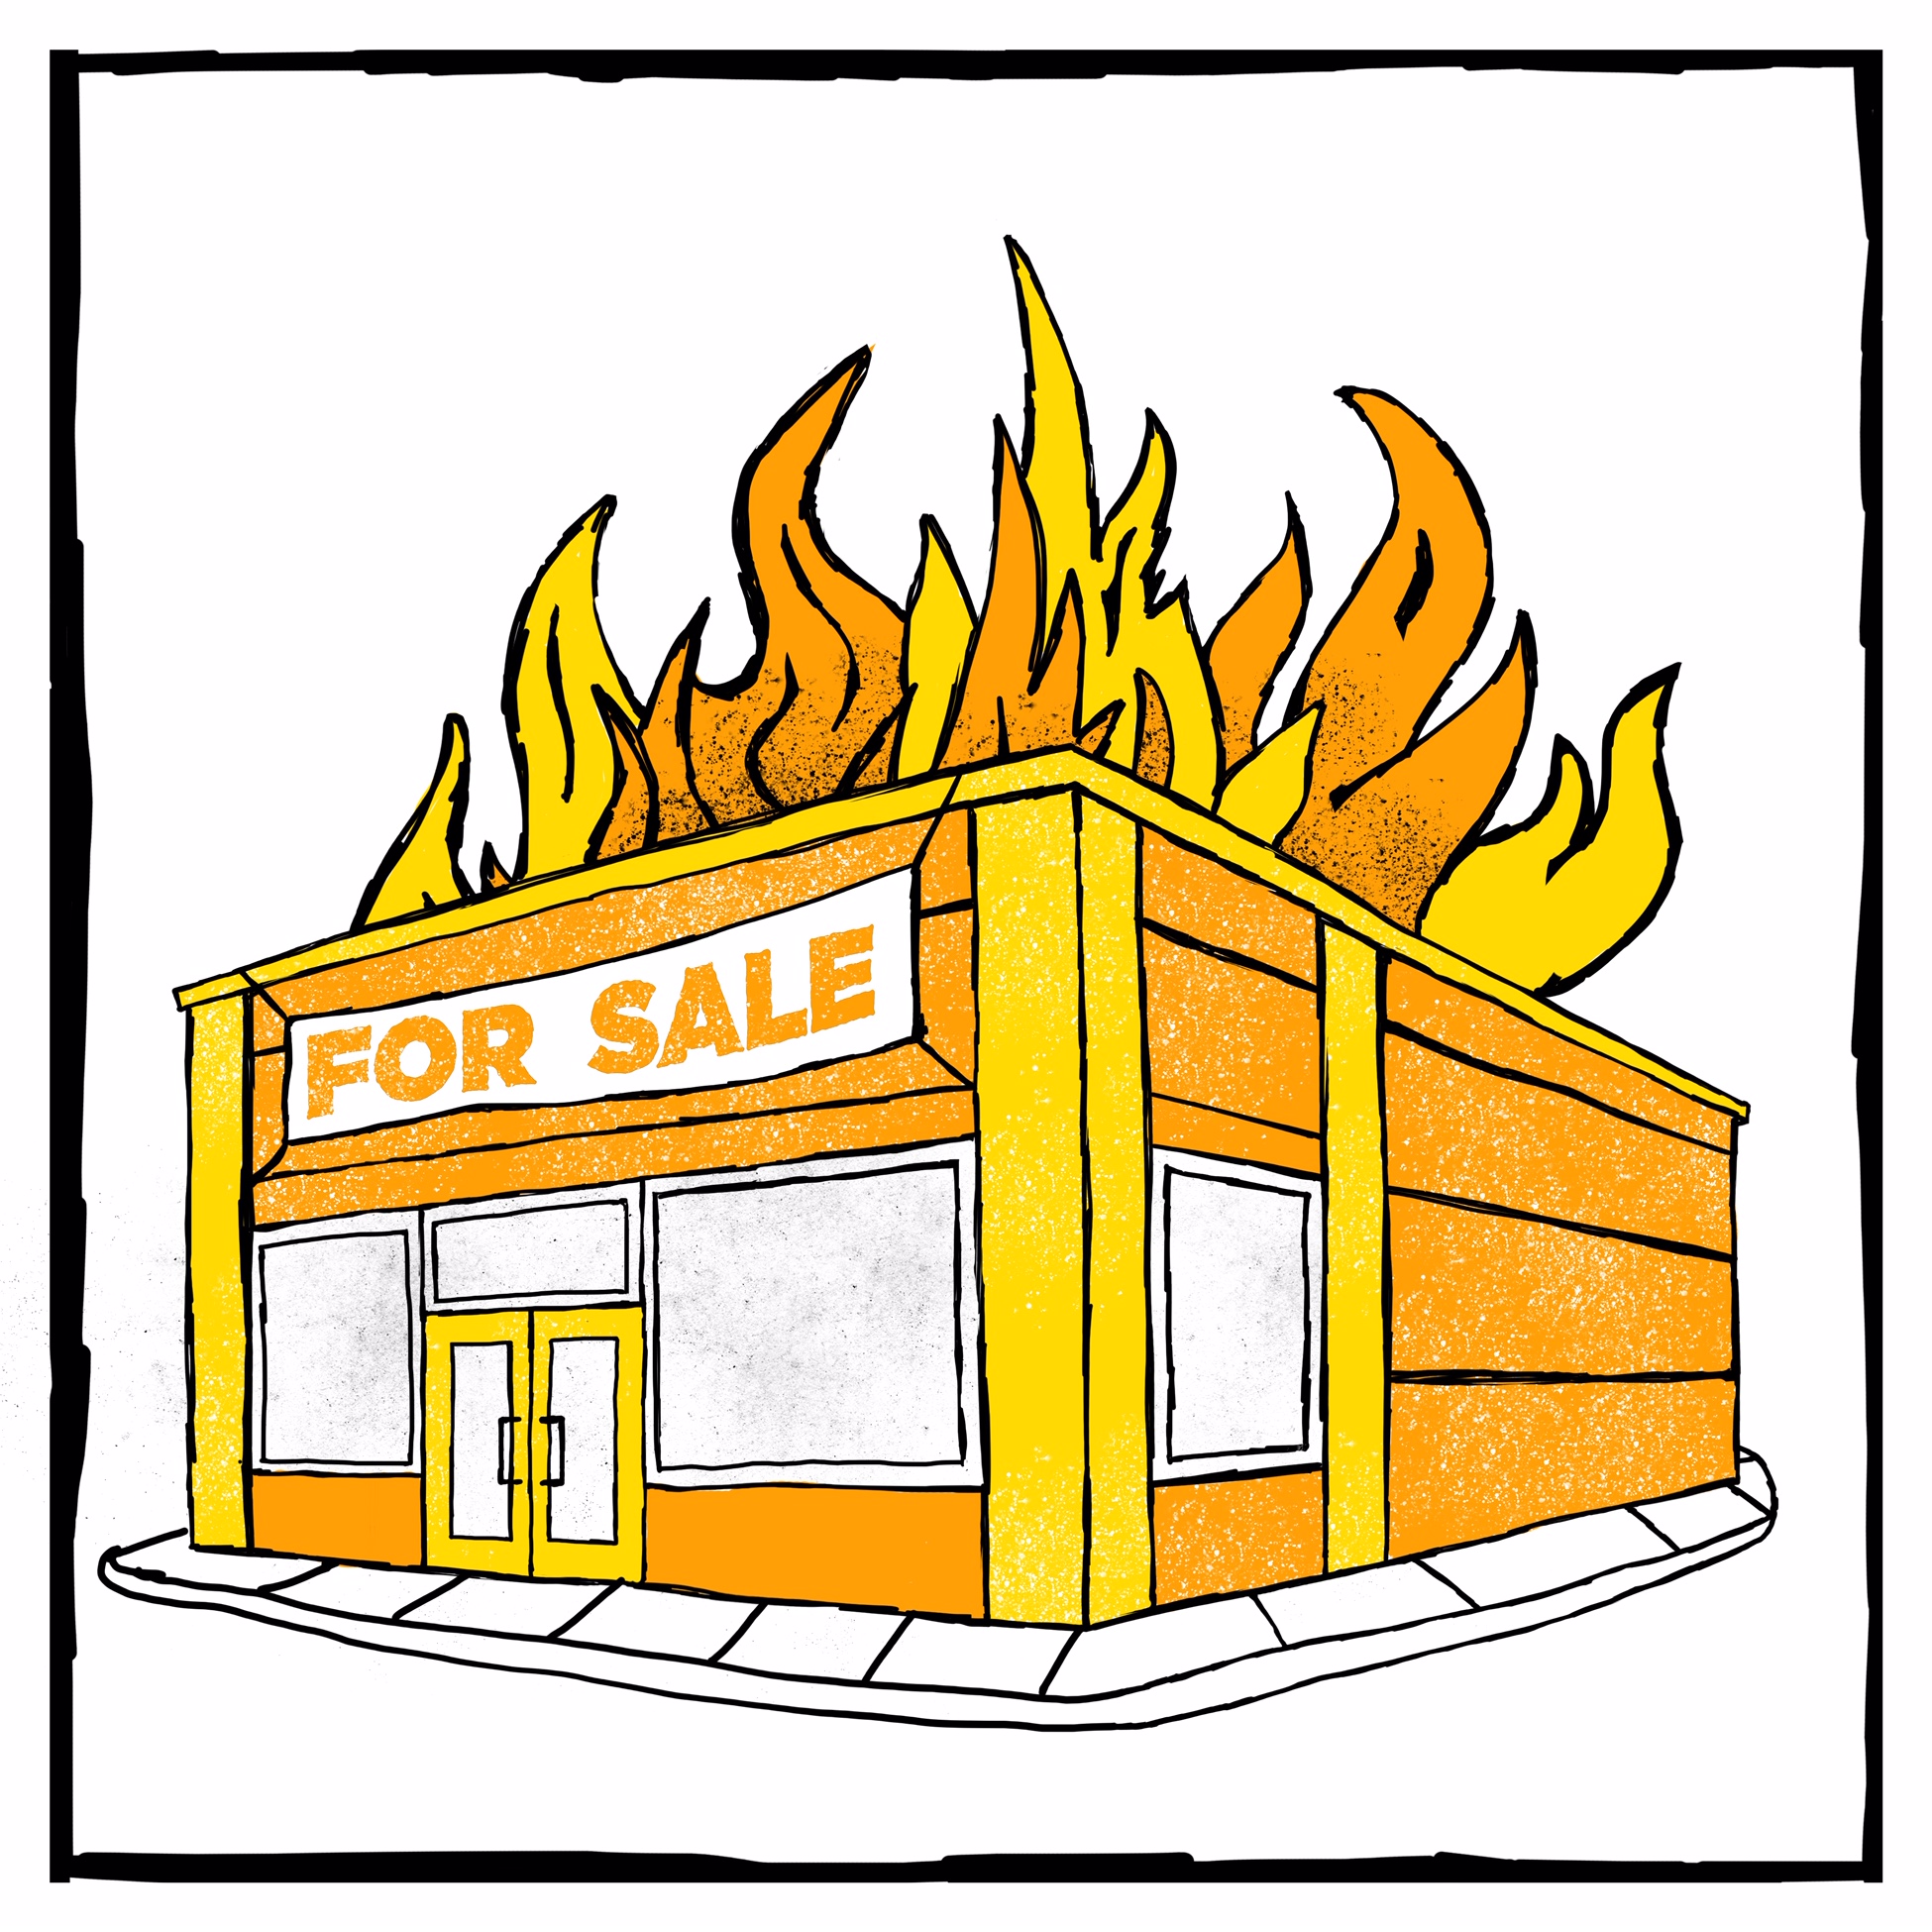 Succession planning failure the fire sale